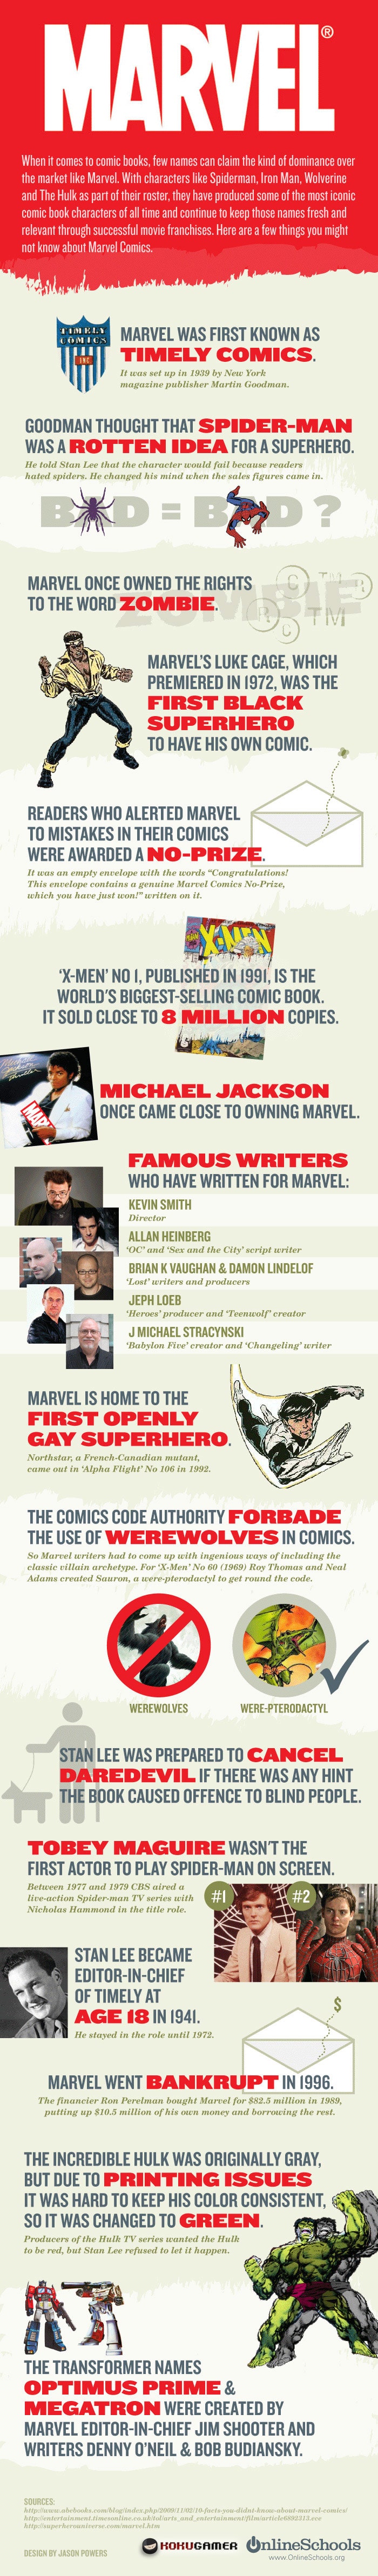 Marvel Event History Timeline Infographic